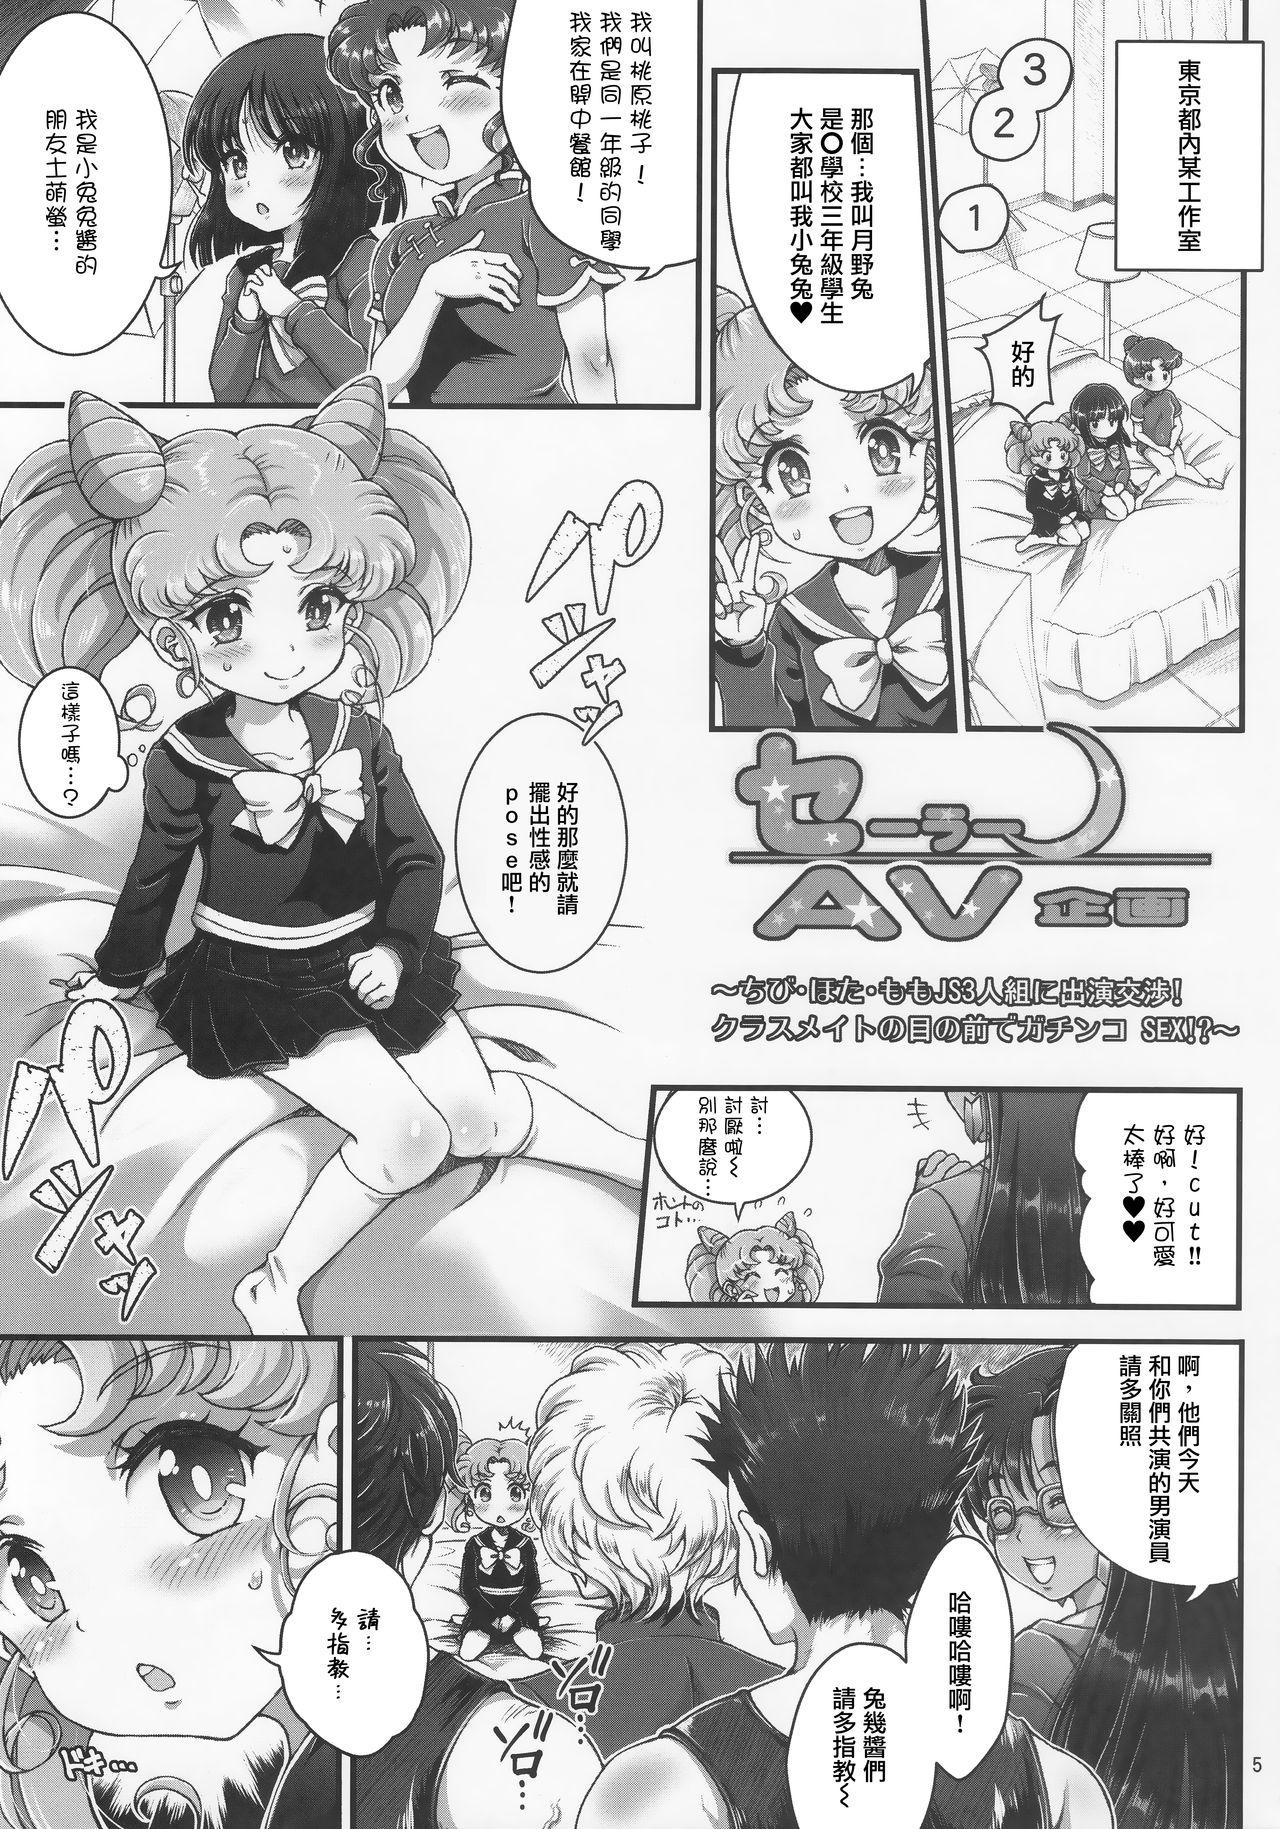 Sailor AV Kikaku 4